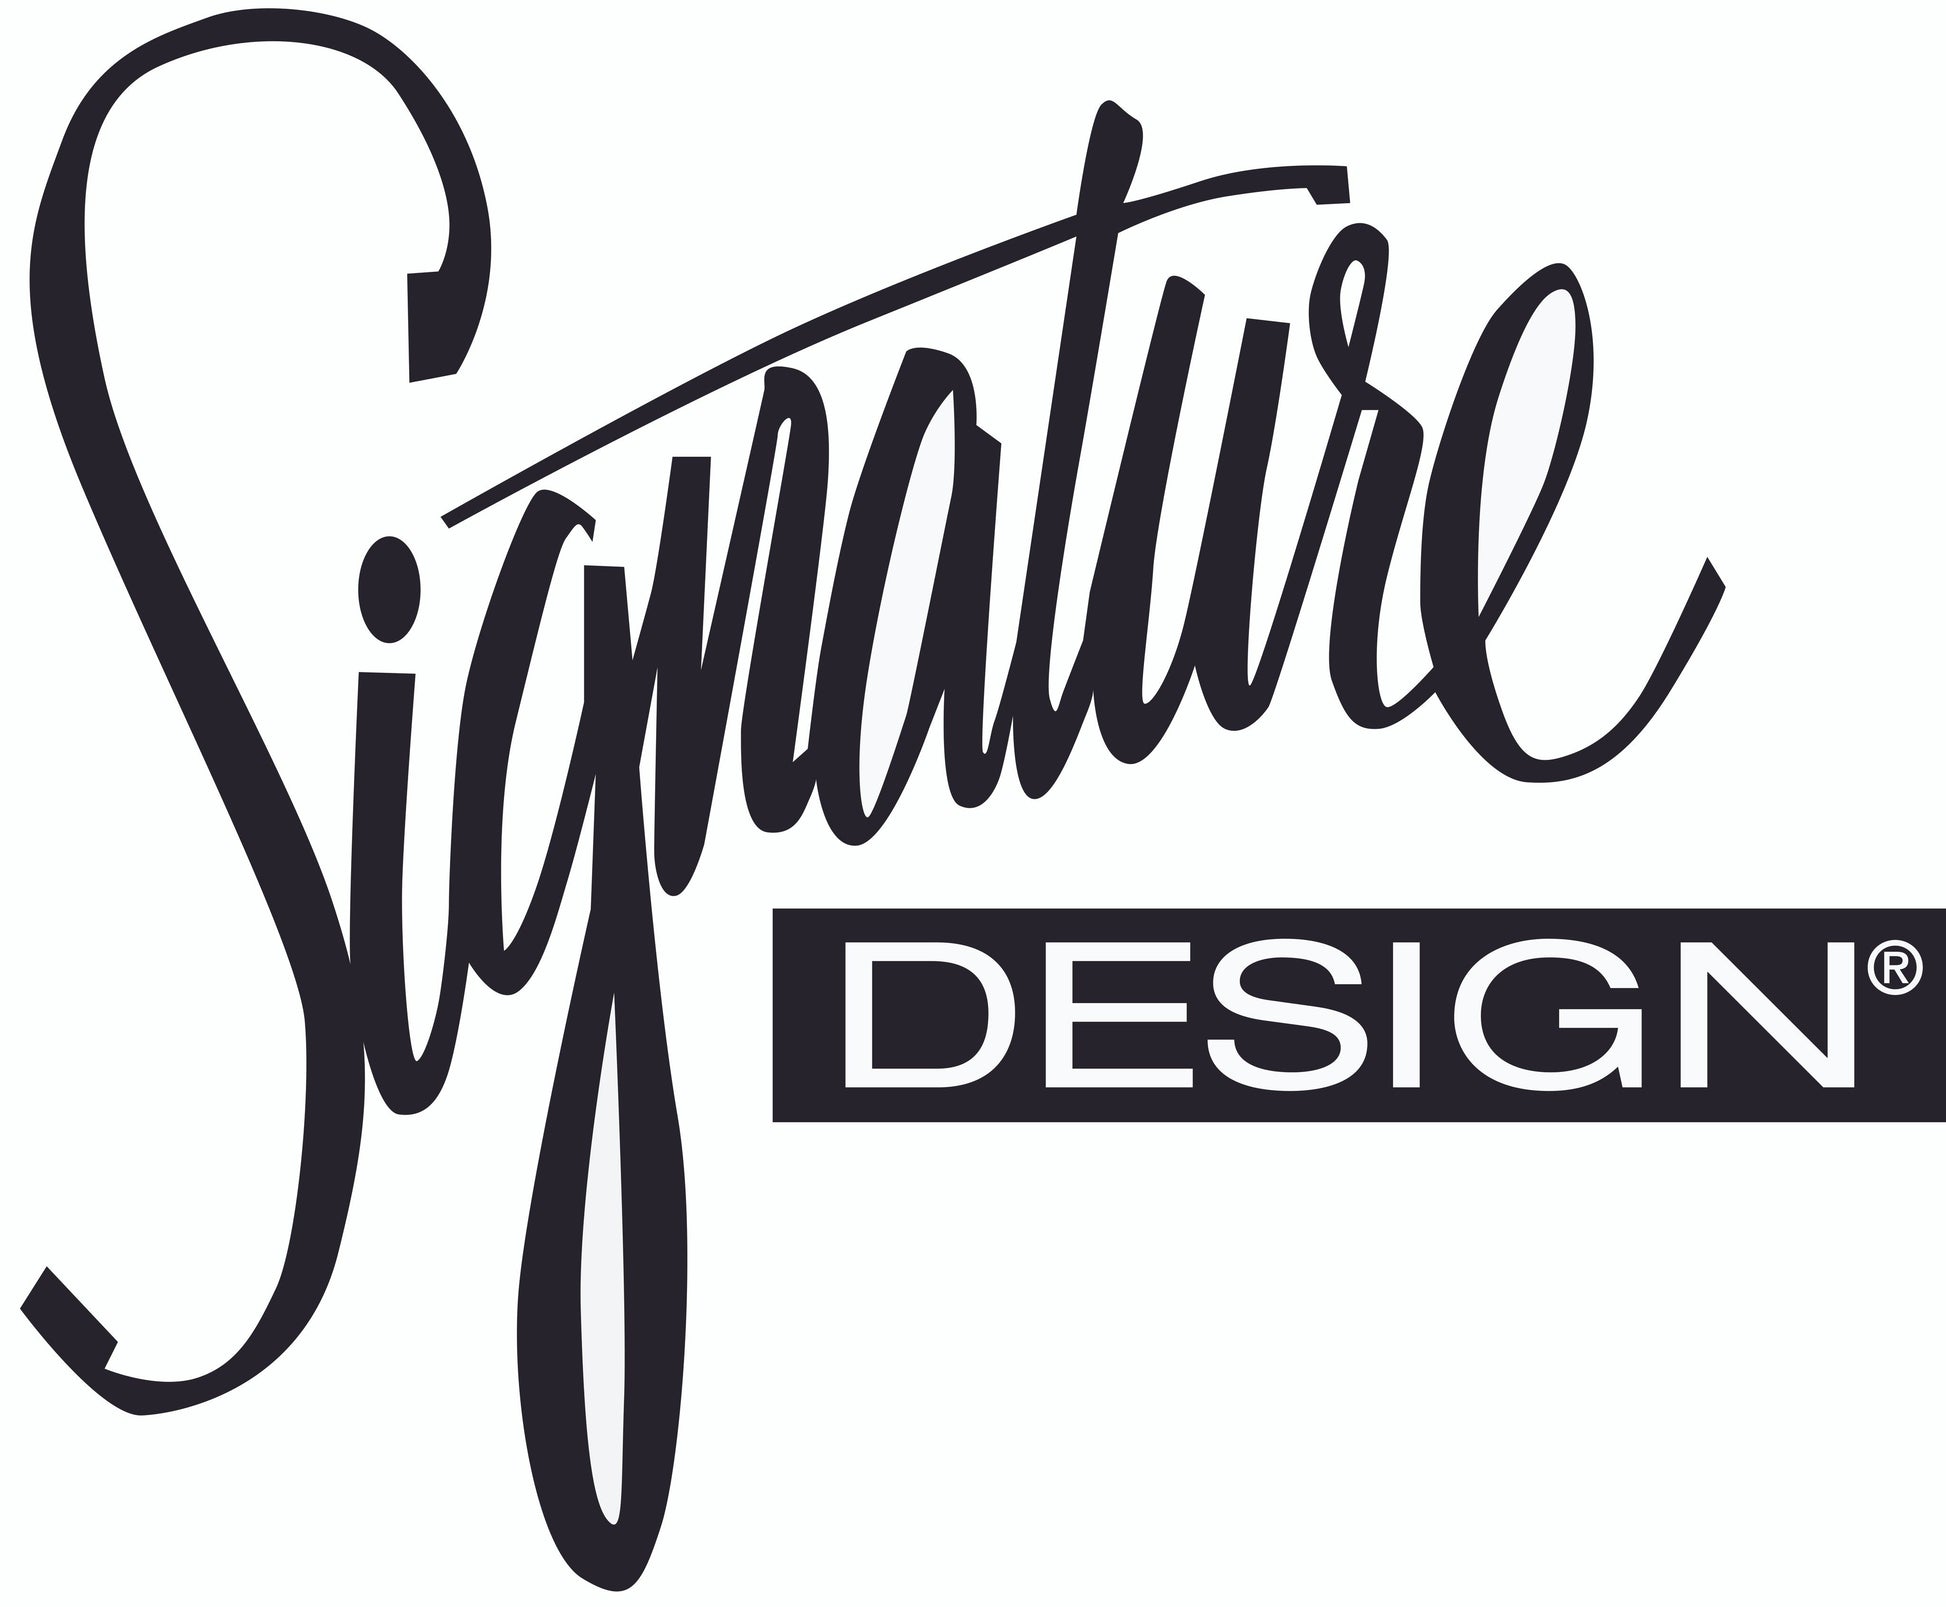 Dakmore Dresser and Mirror Signature Design by Ashley®